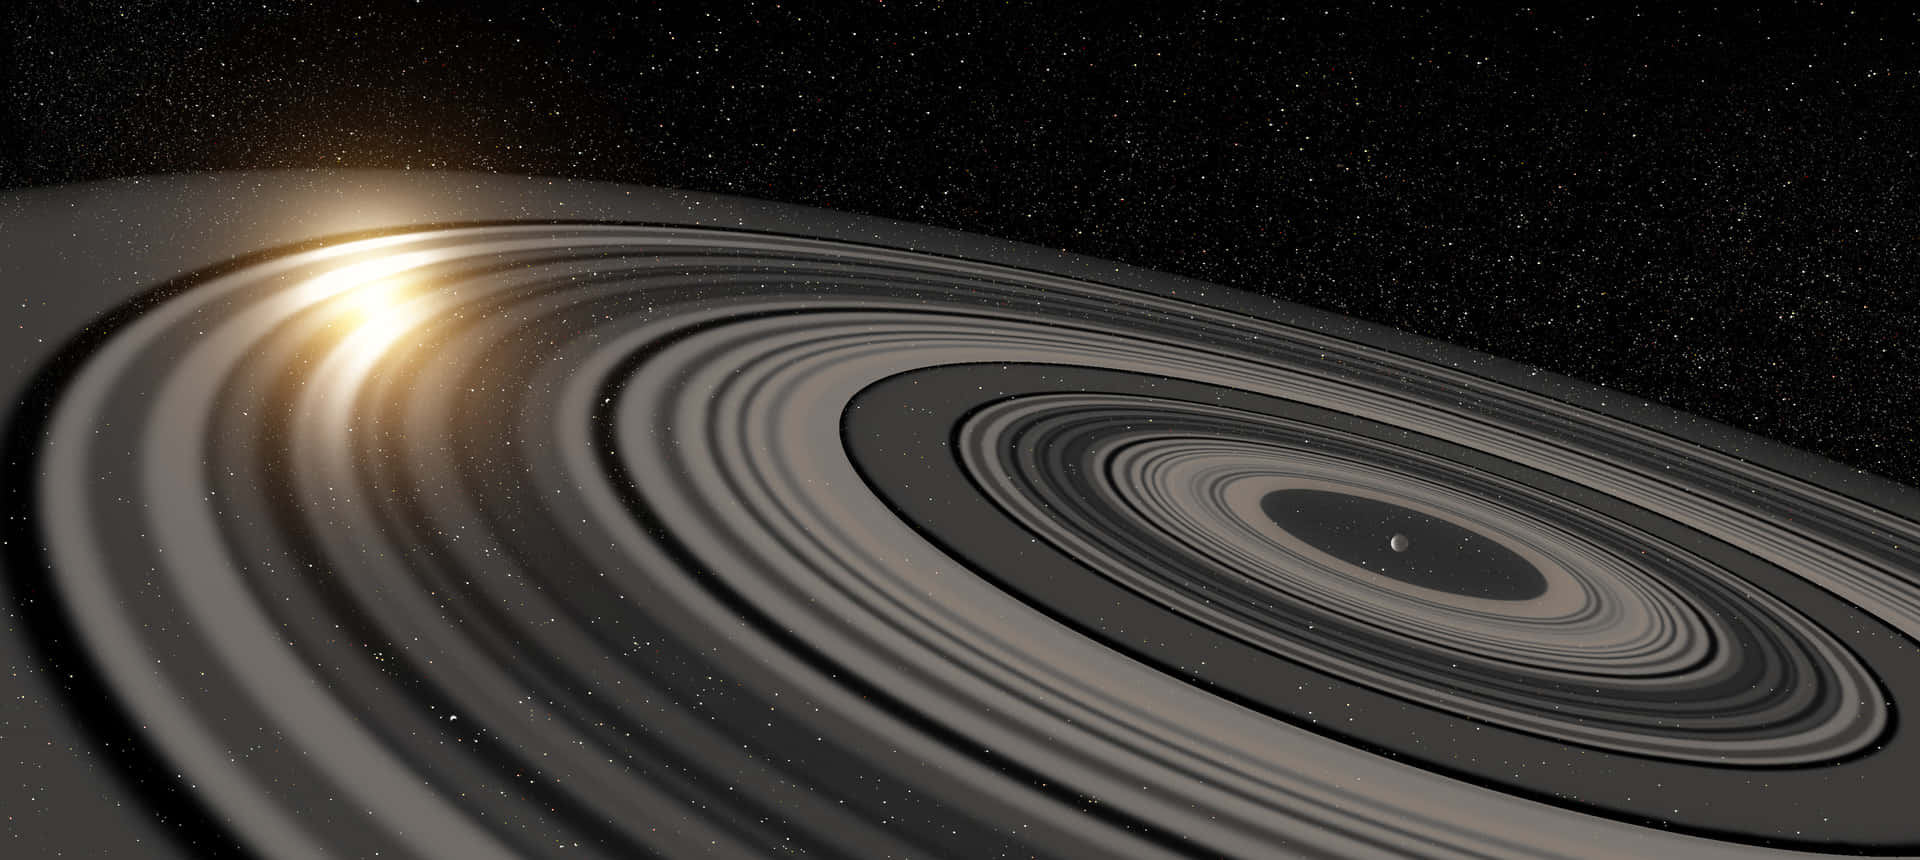 “Saturn's Rings Illuminate the Night Sky”